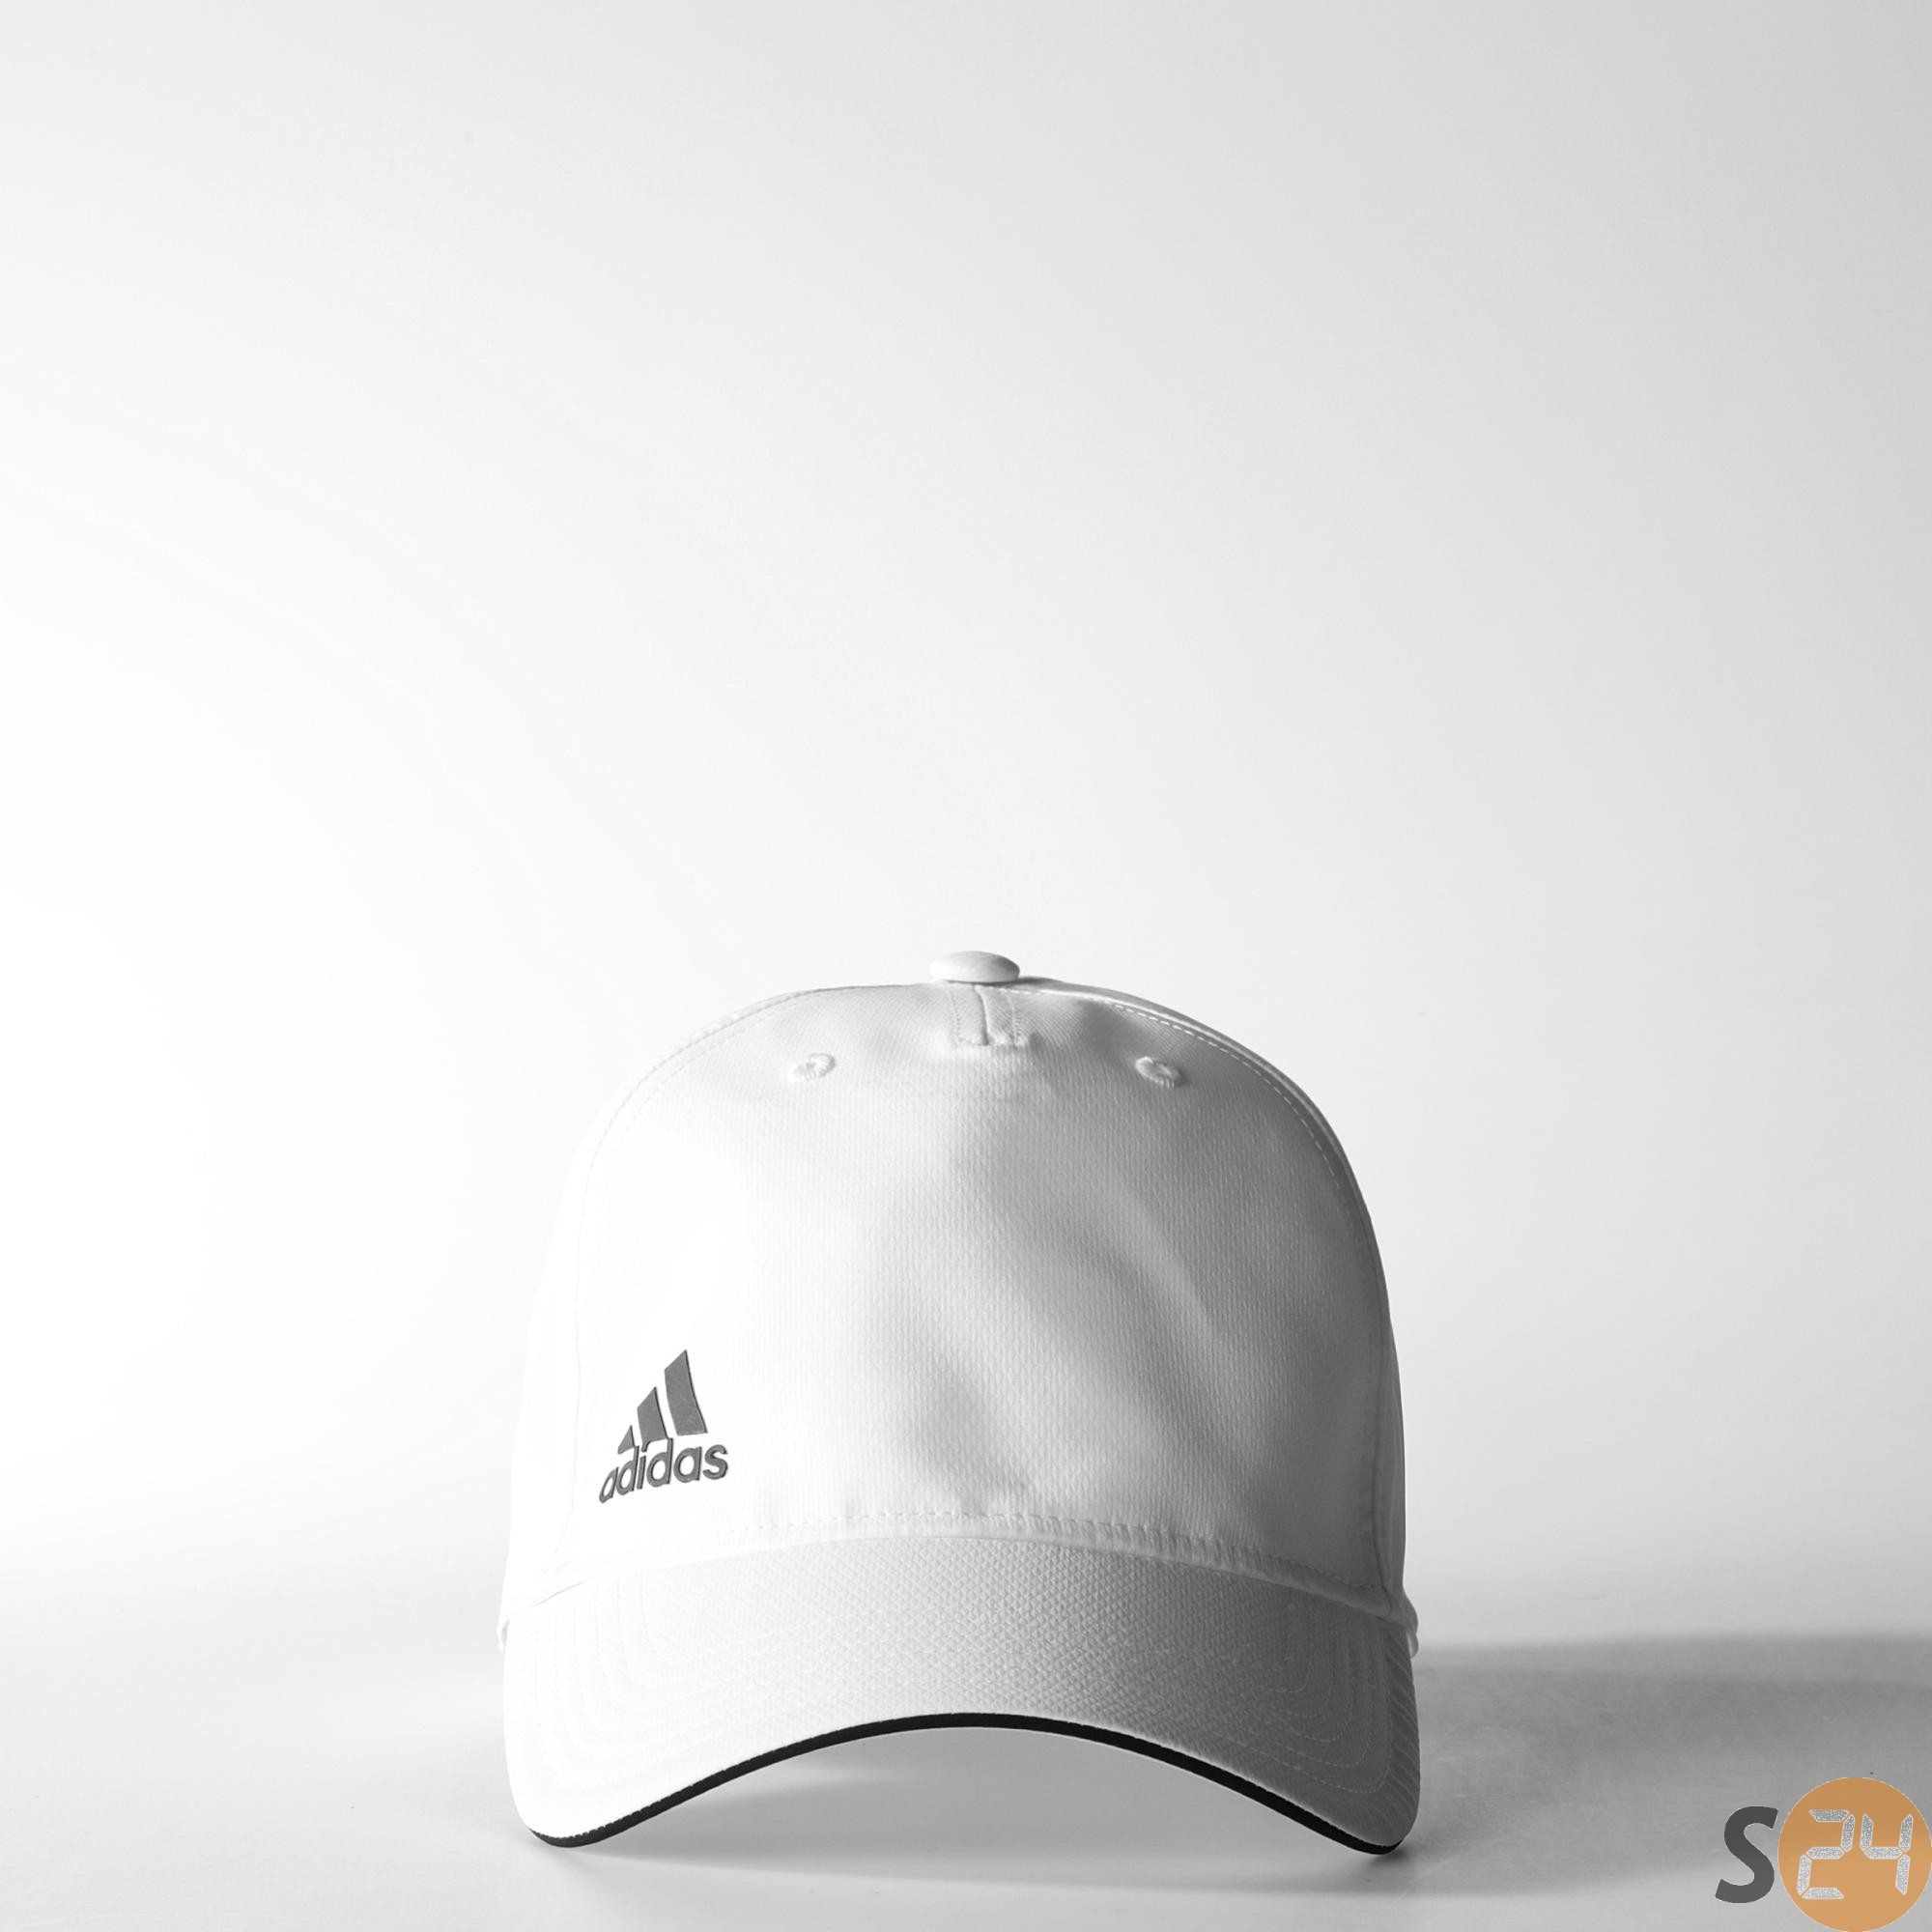 Adidas  Clmlt cap w S20516